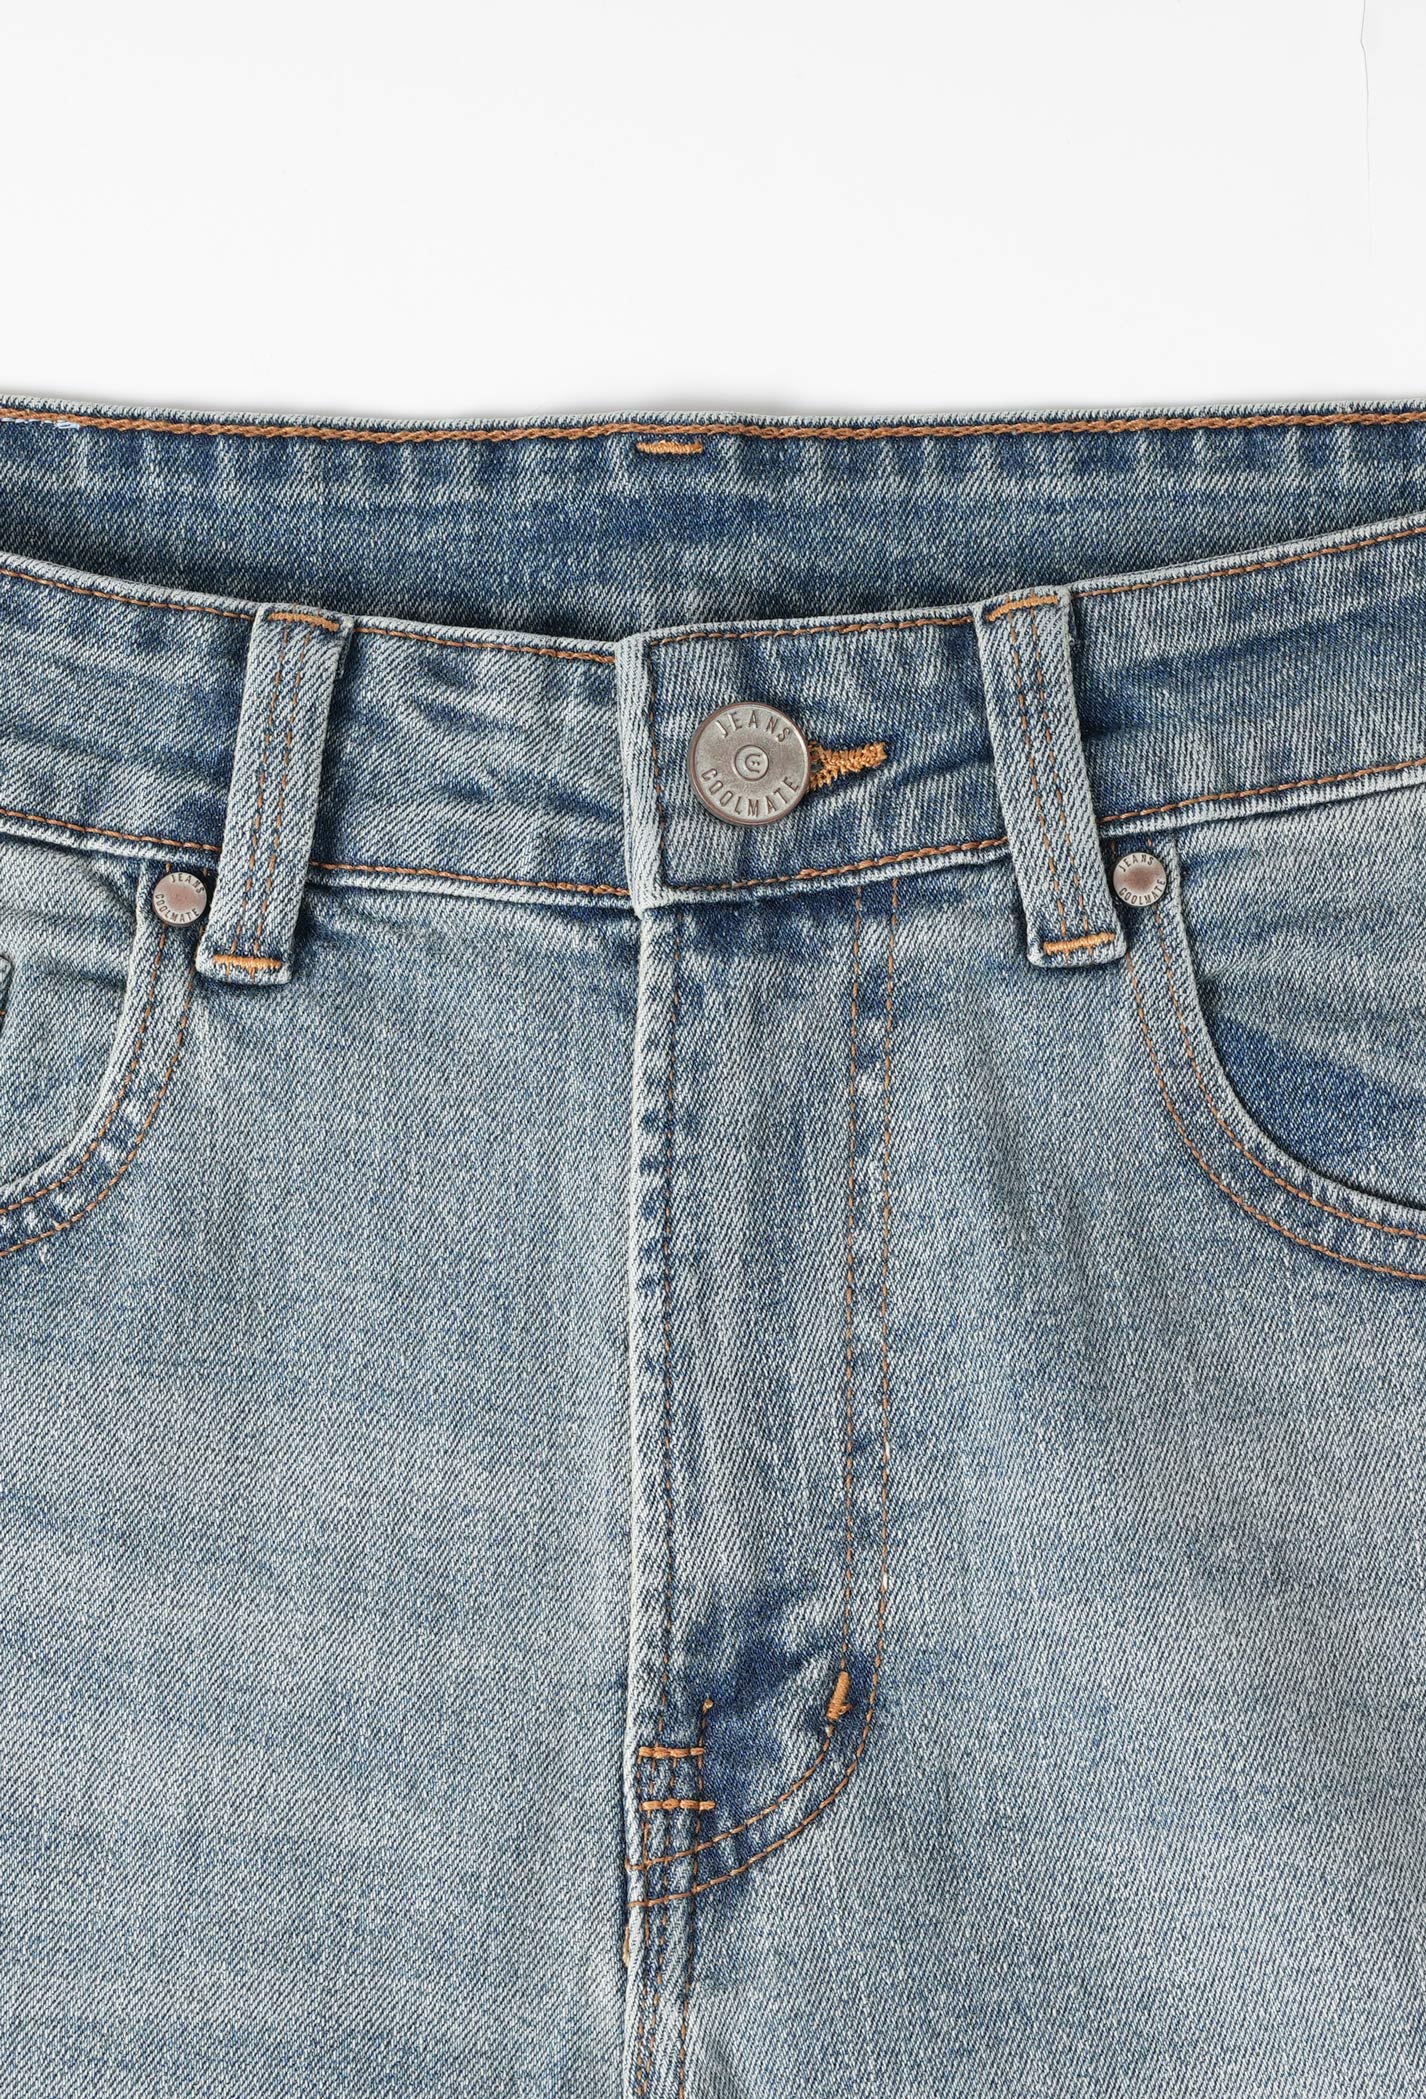 OUTLET - Quần Jeans Basic Slim V2 Xanh nhạt 7